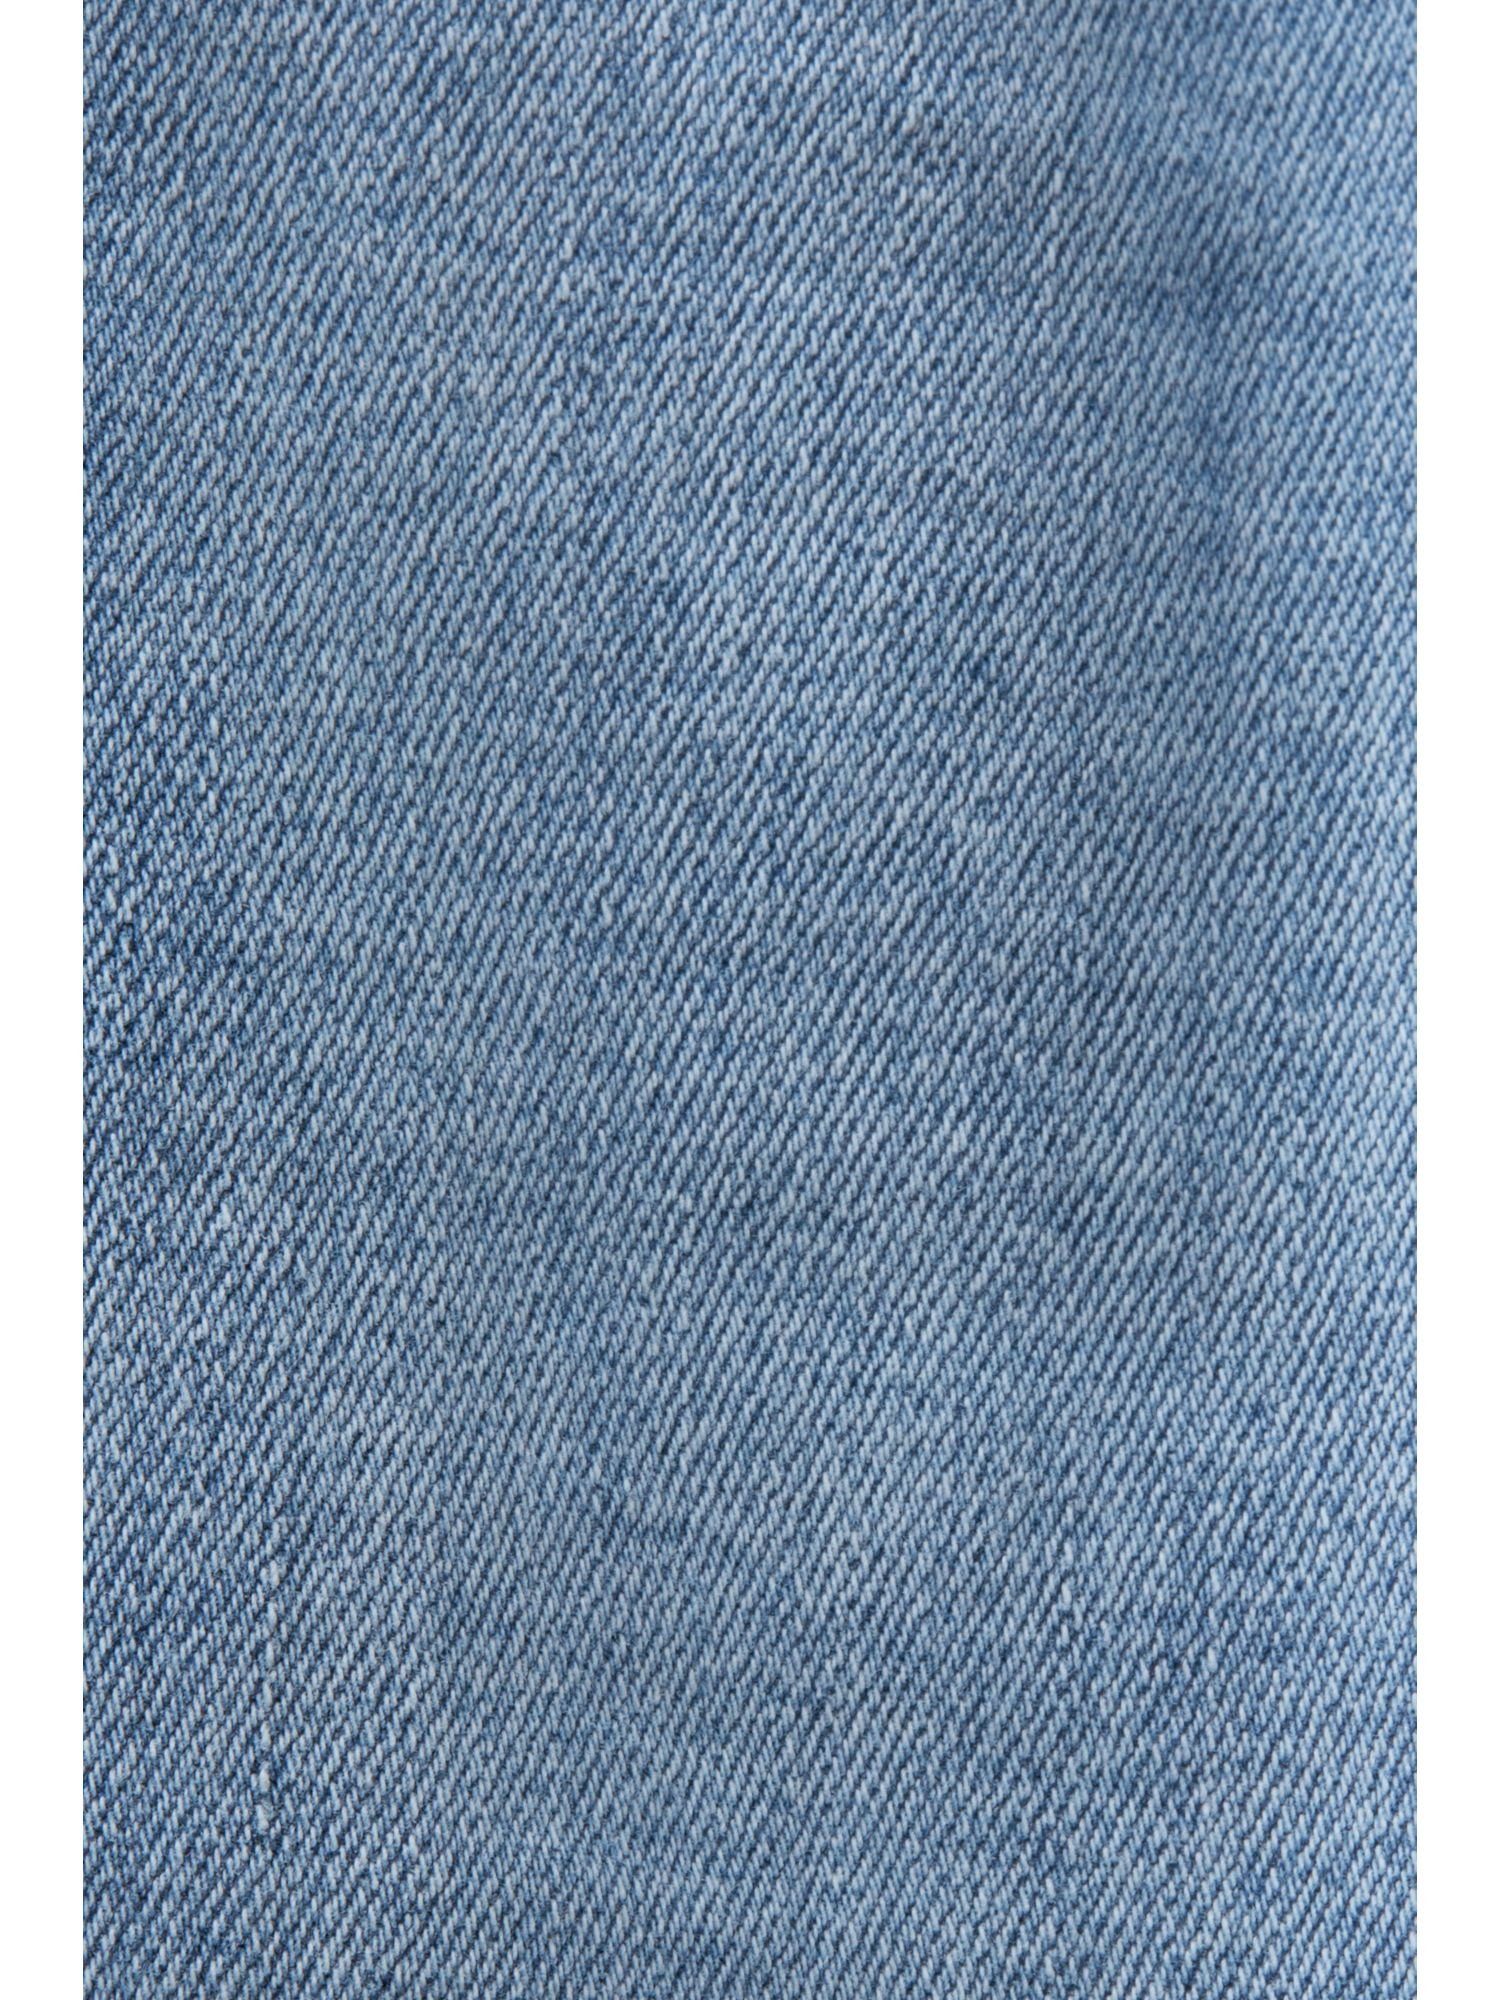 Esprit LIGHT Washed BLUE WASHED Bio-Baumwolle mit Jeans Skinny-fit-Jeans